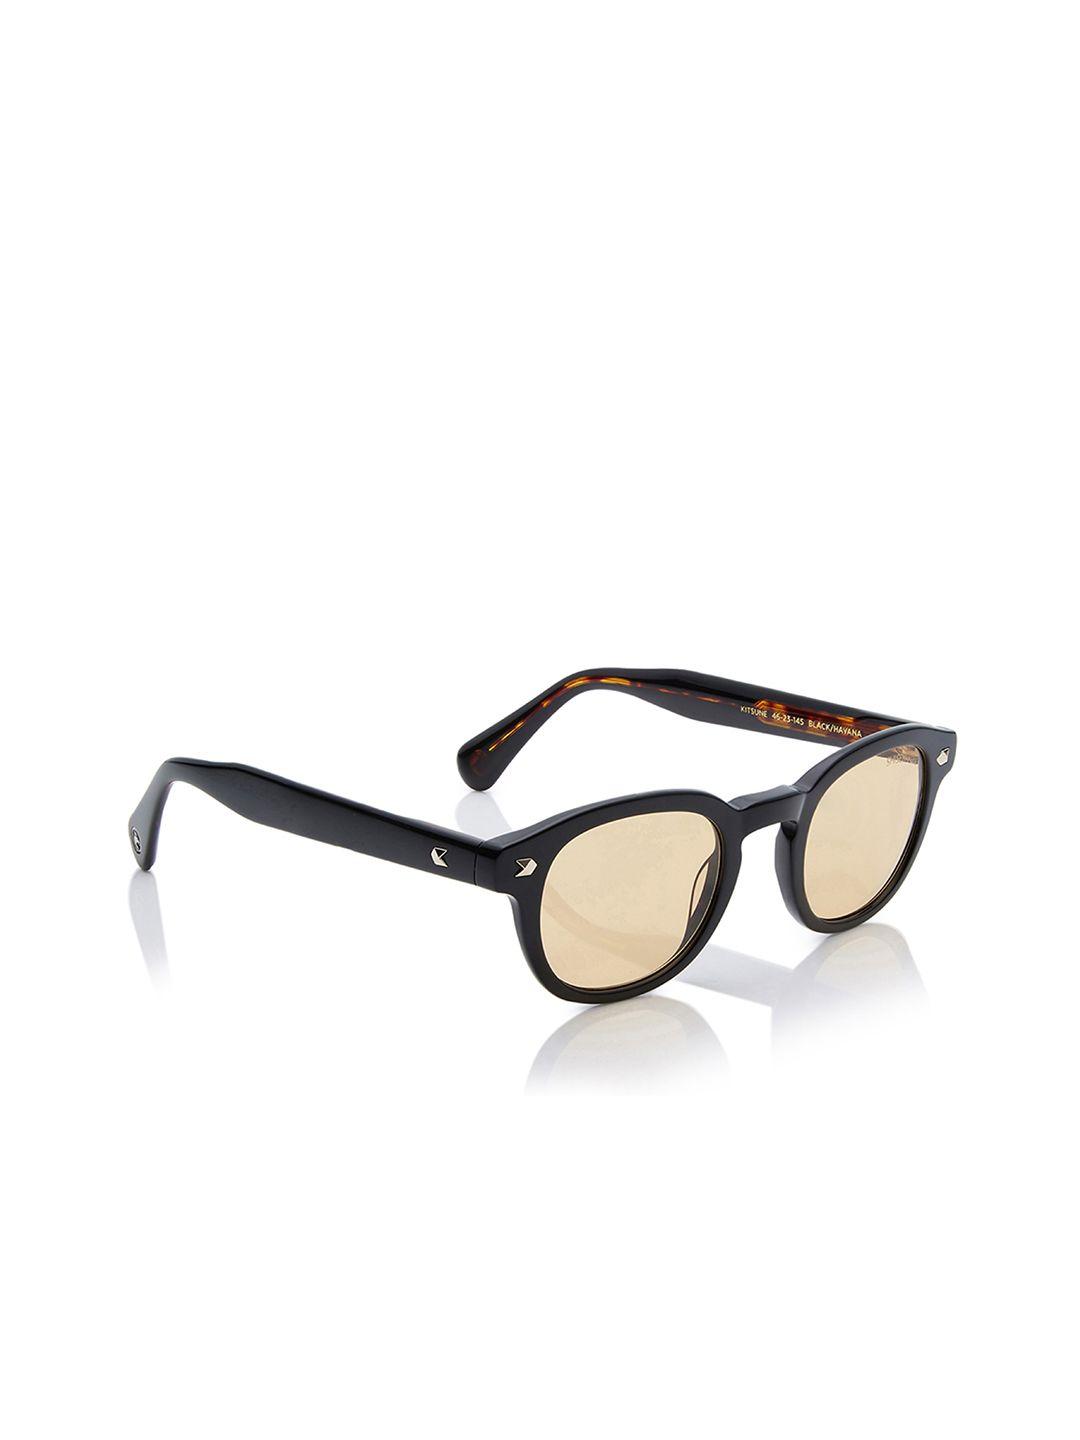 shisen fox kitsune unisex round sunglasses with uv protected lens sg020